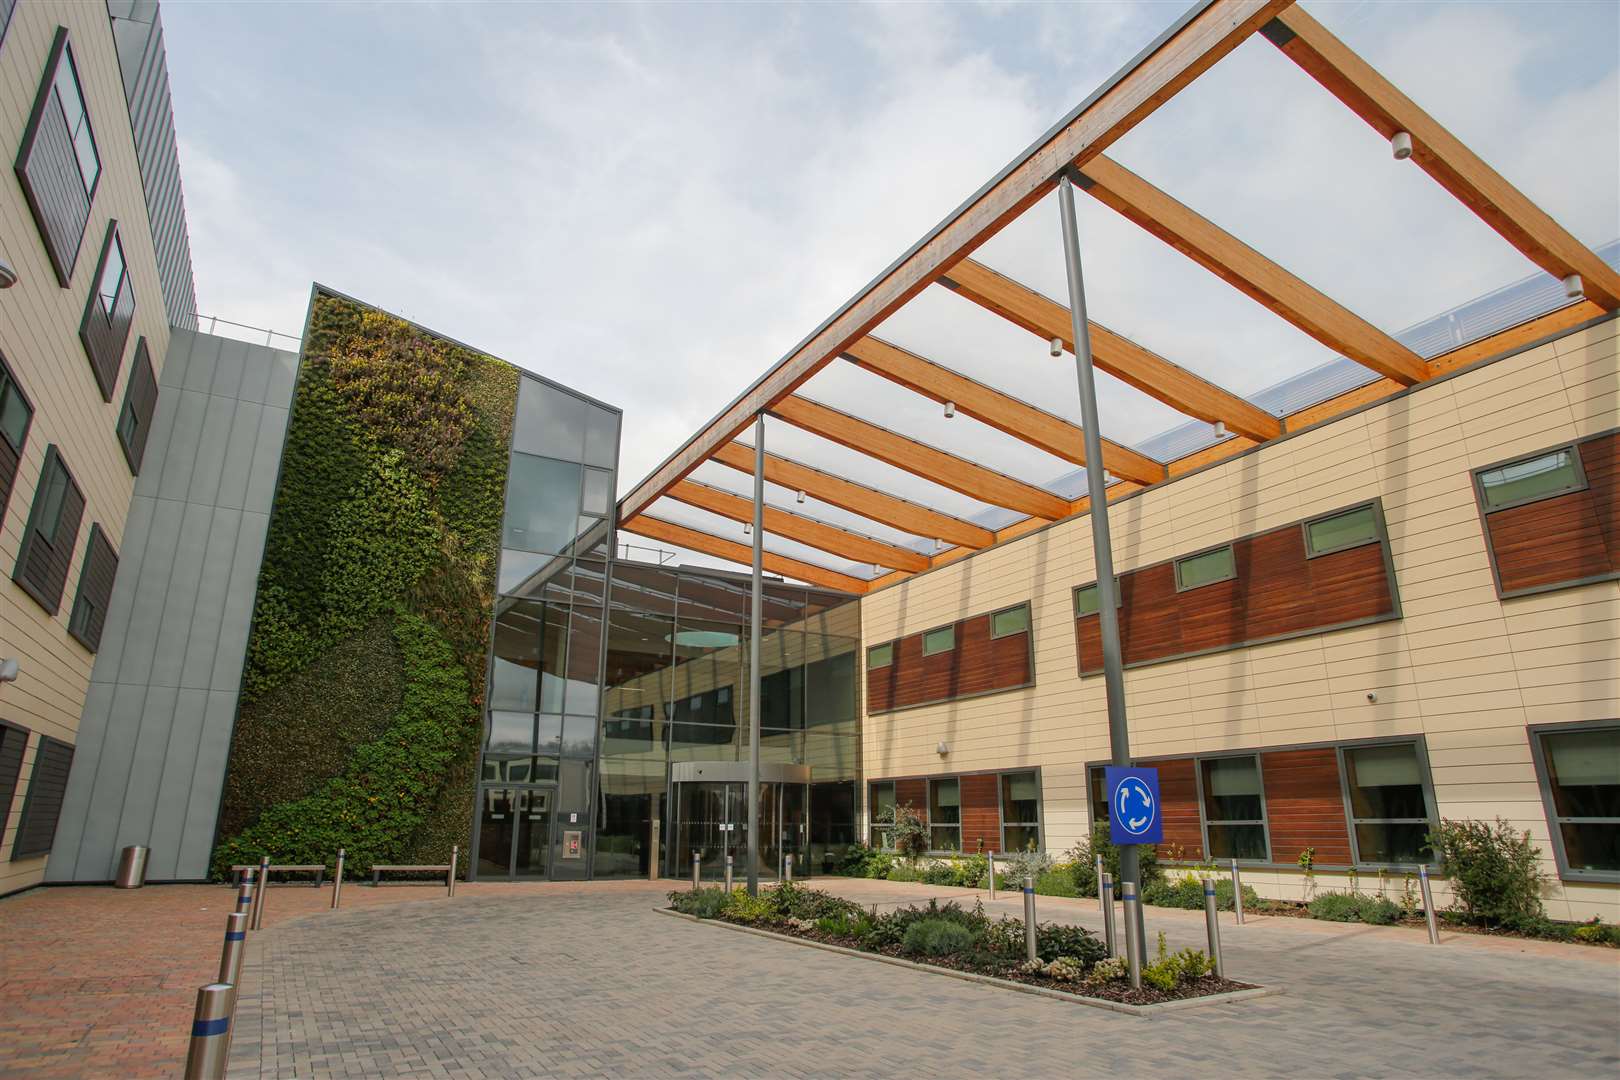 KIMS Hospital is based on Kent Medical Campus